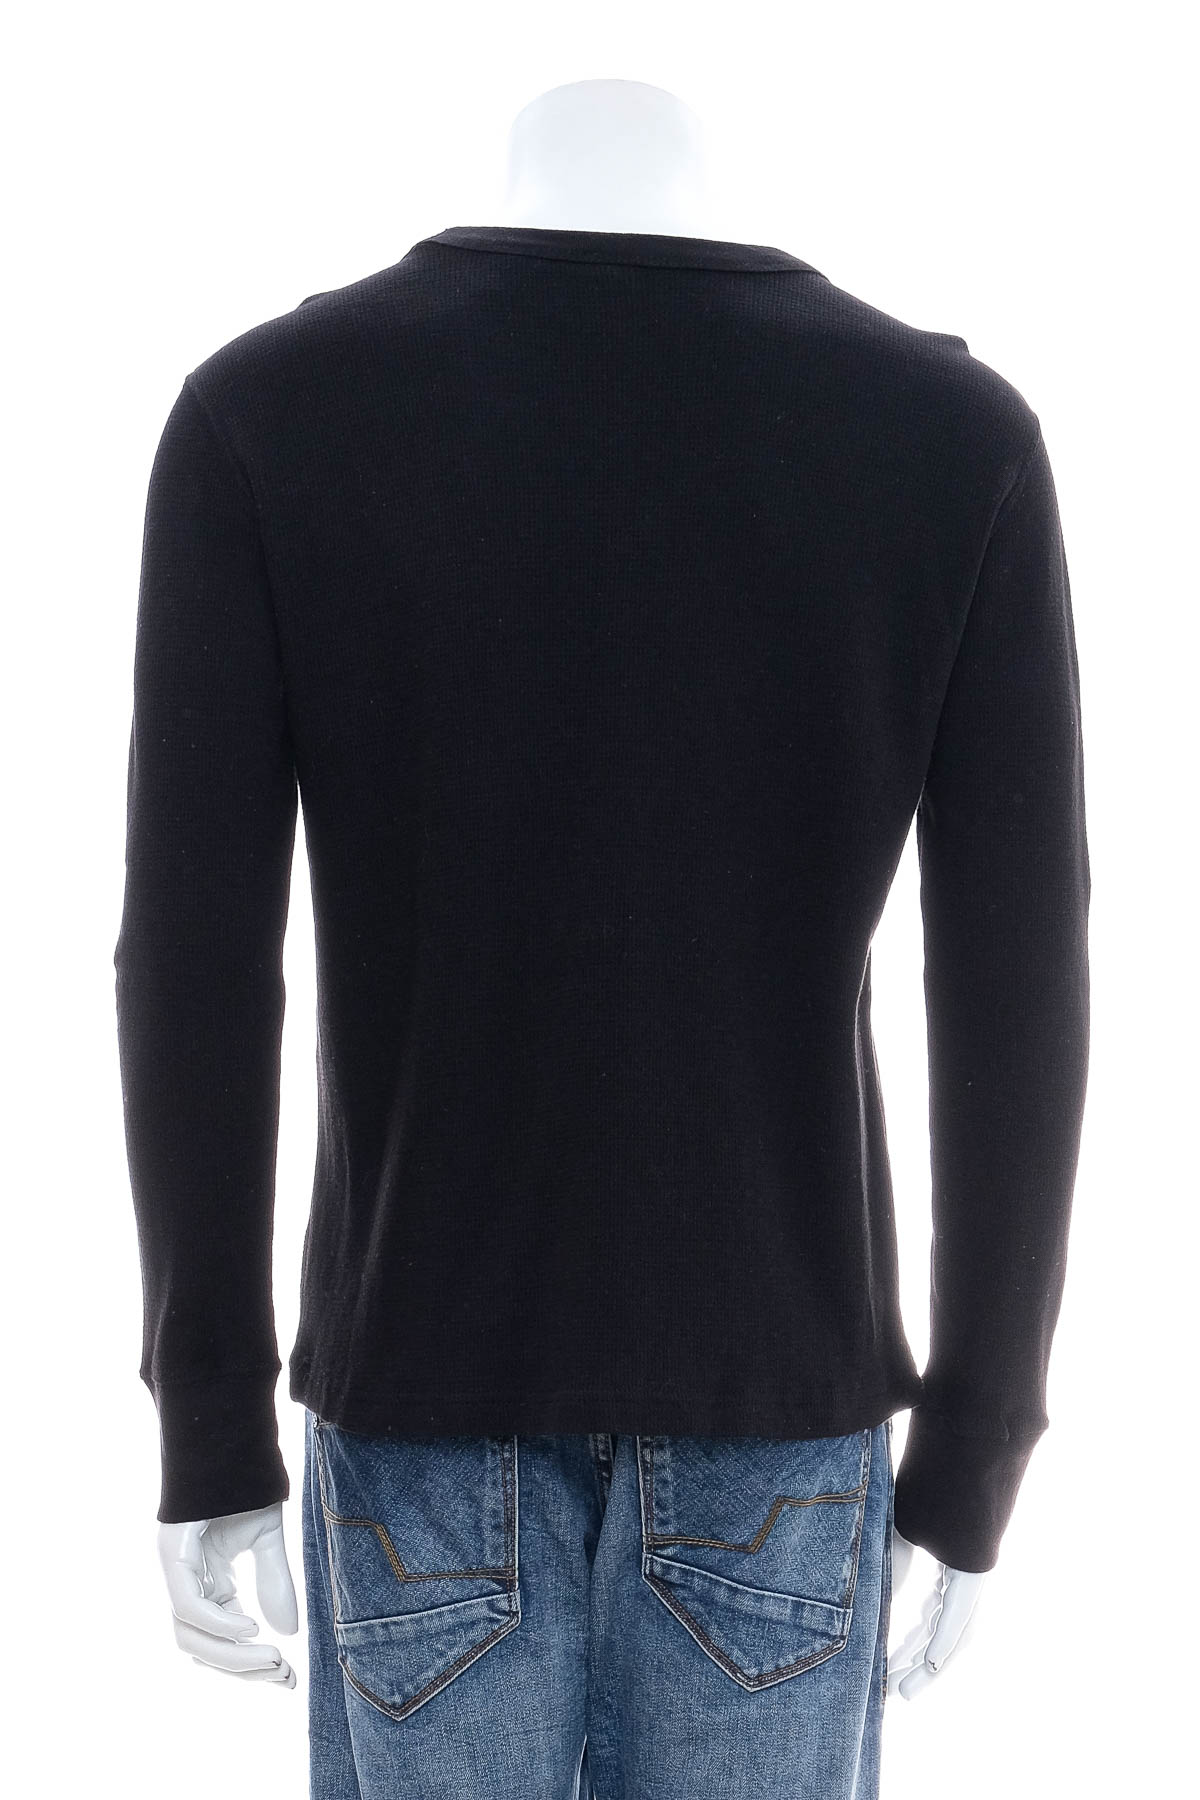 Men's sweater - Rockware Anthill Trading - 1